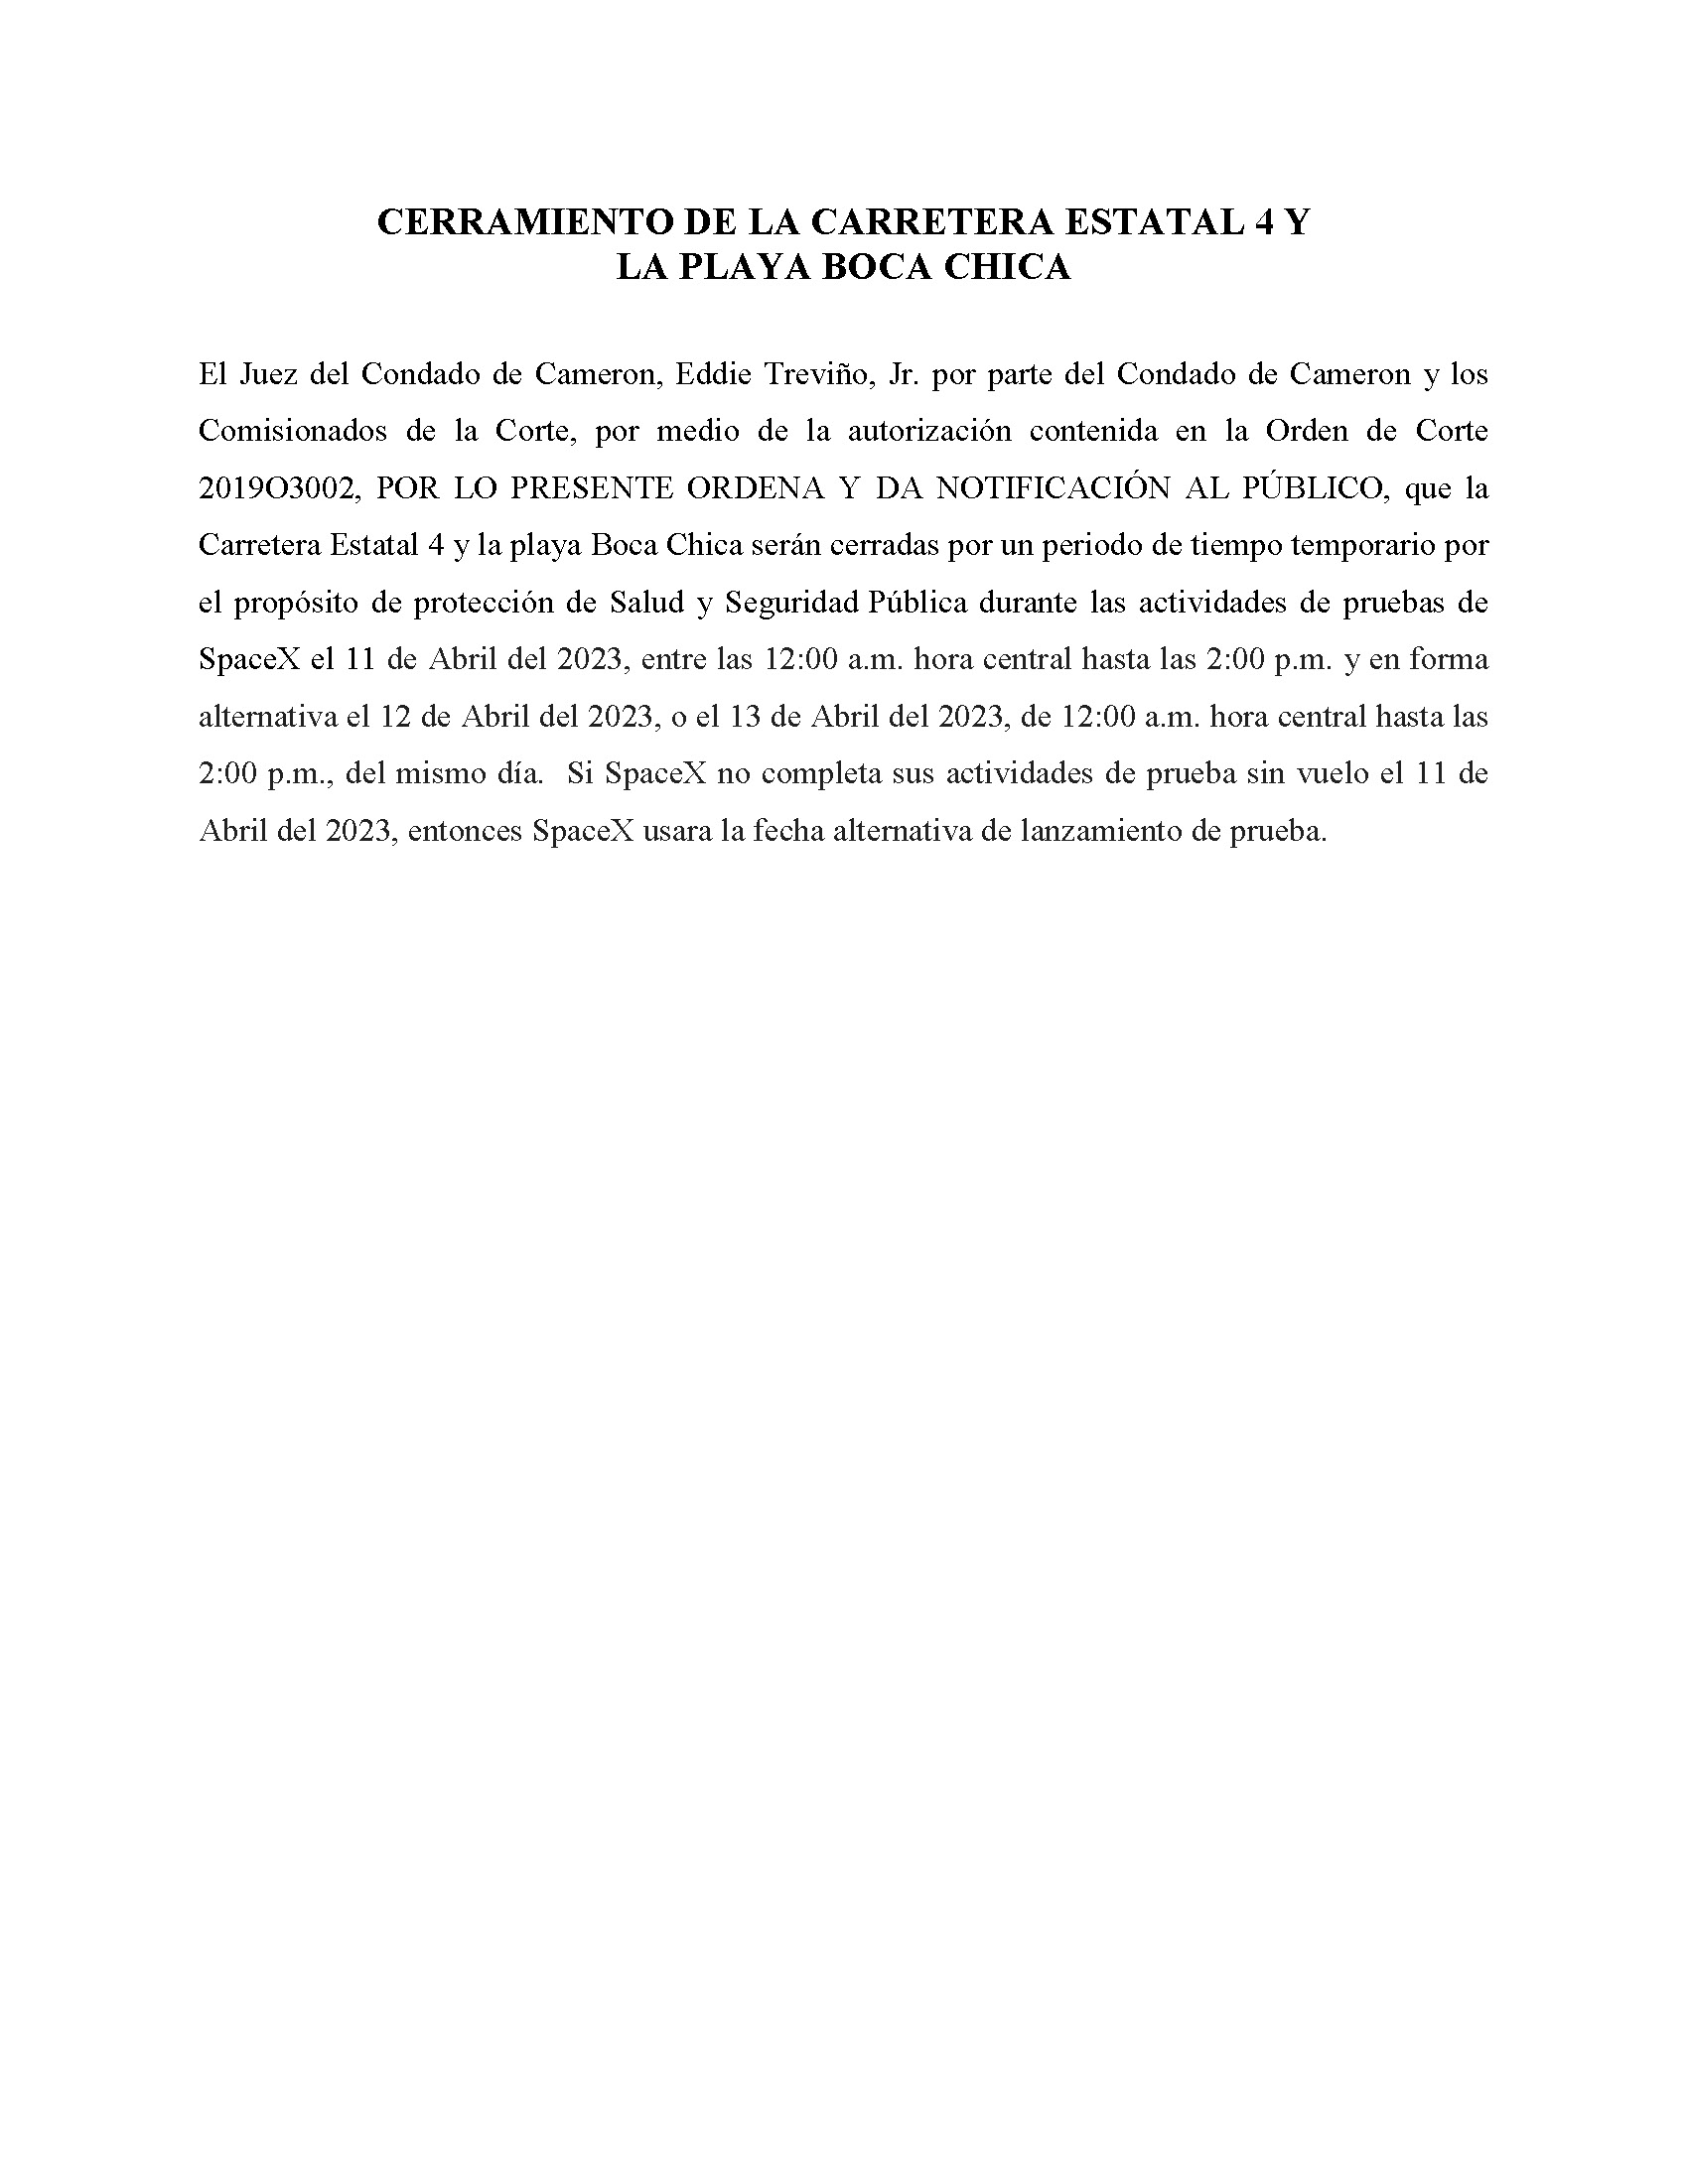 ORDER.CLOSURE OF HIGHWAY 4 Y LA PLAYA BOCA CHICA.SPANISH.04.11.23